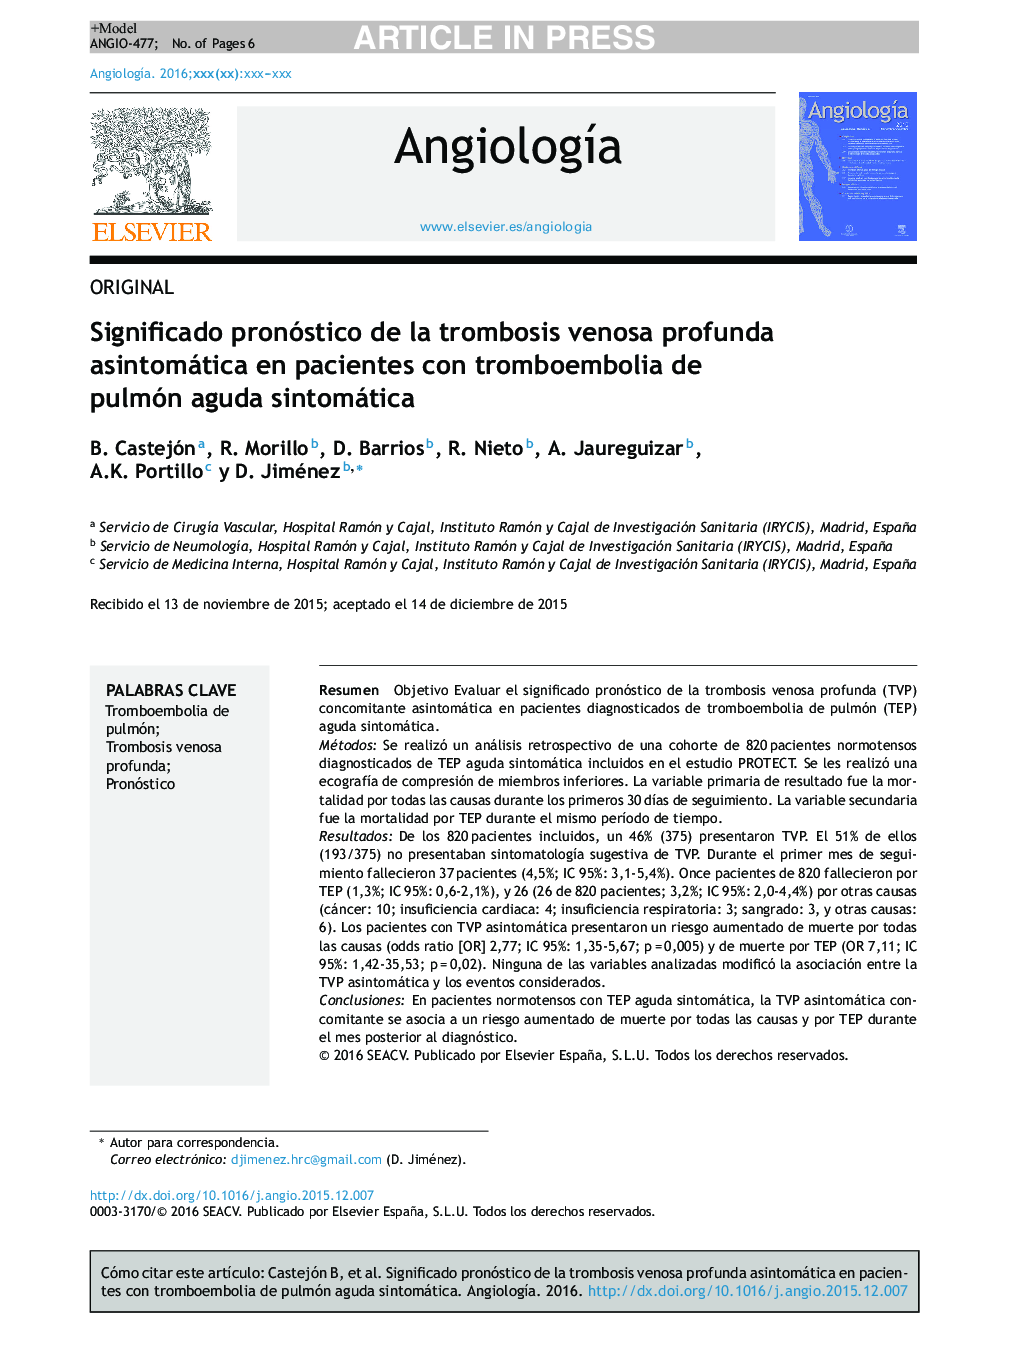 Significado pronóstico de la trombosis venosa profunda asintomática en pacientes con tromboembolia de pulmón aguda sintomática